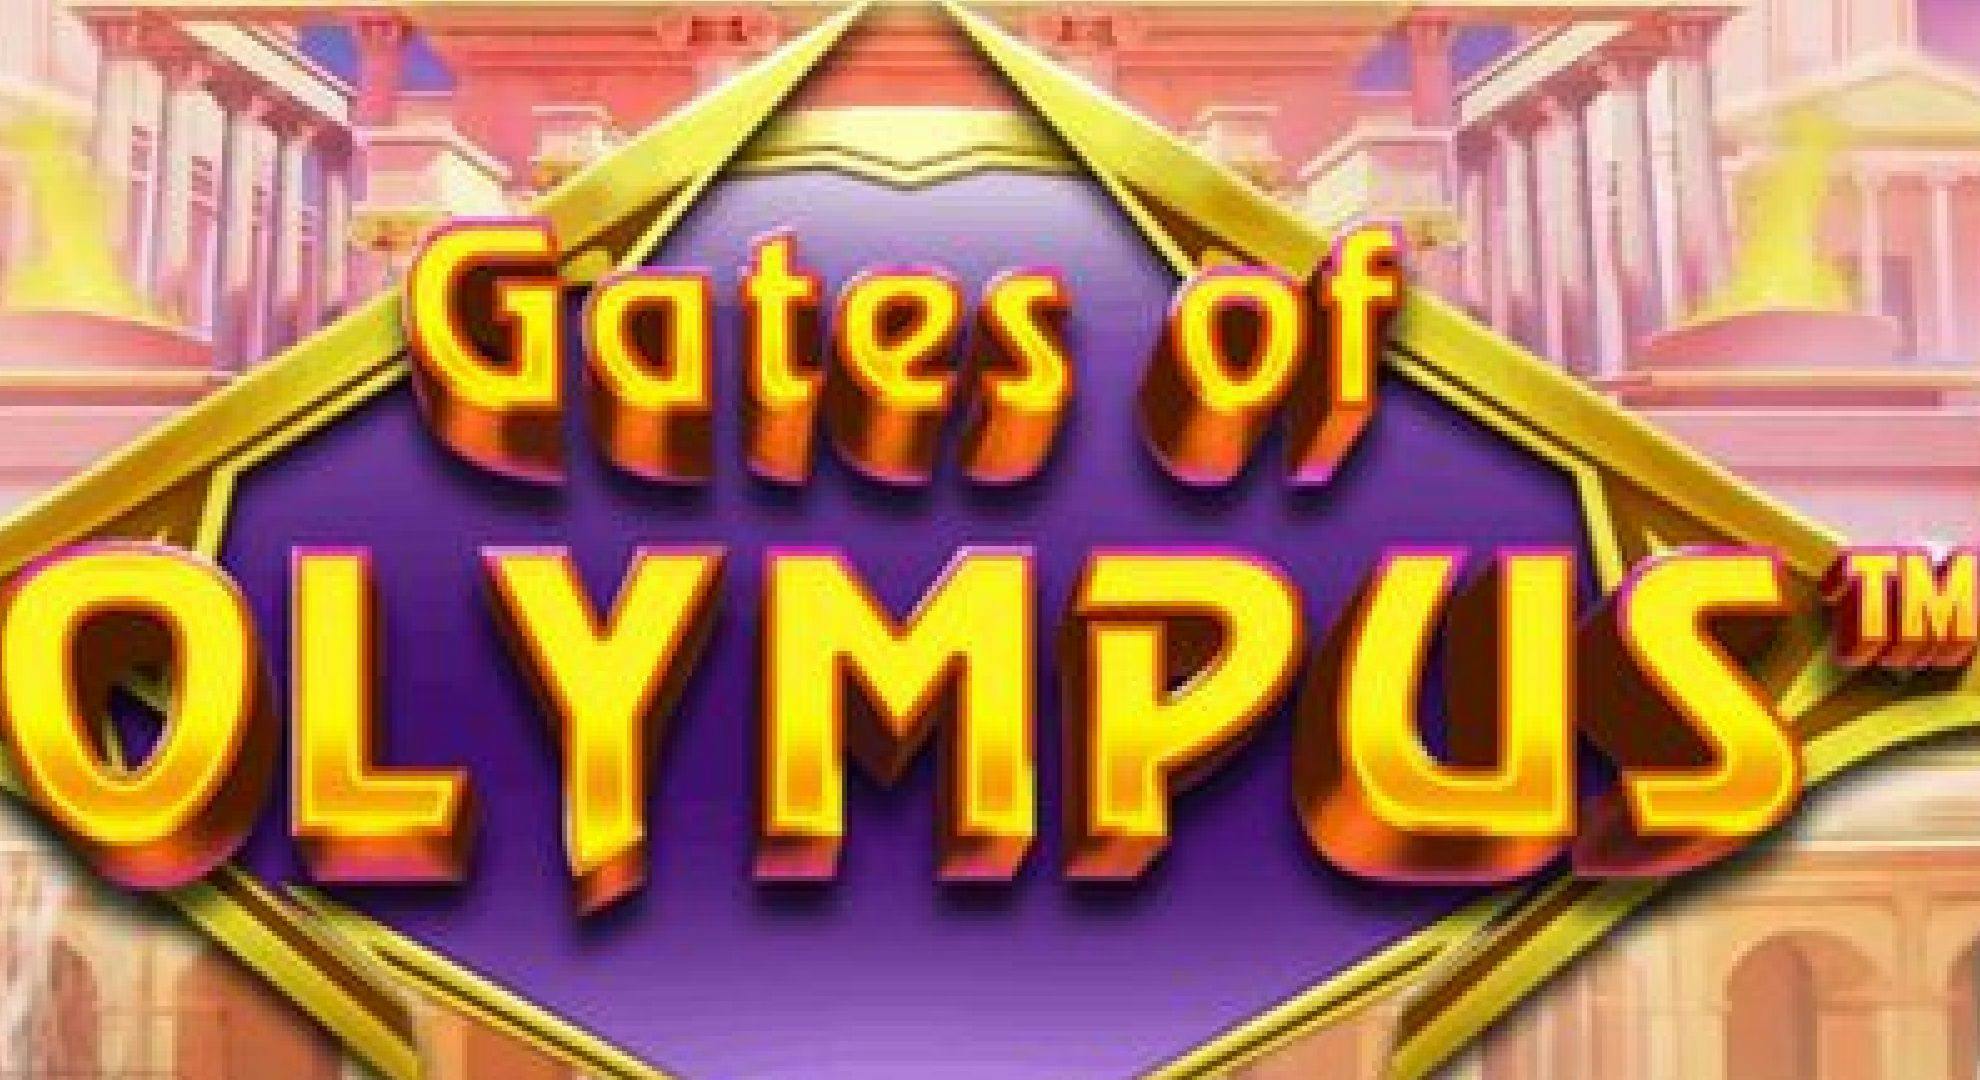 Gates of Olympus Slot Online Free Play